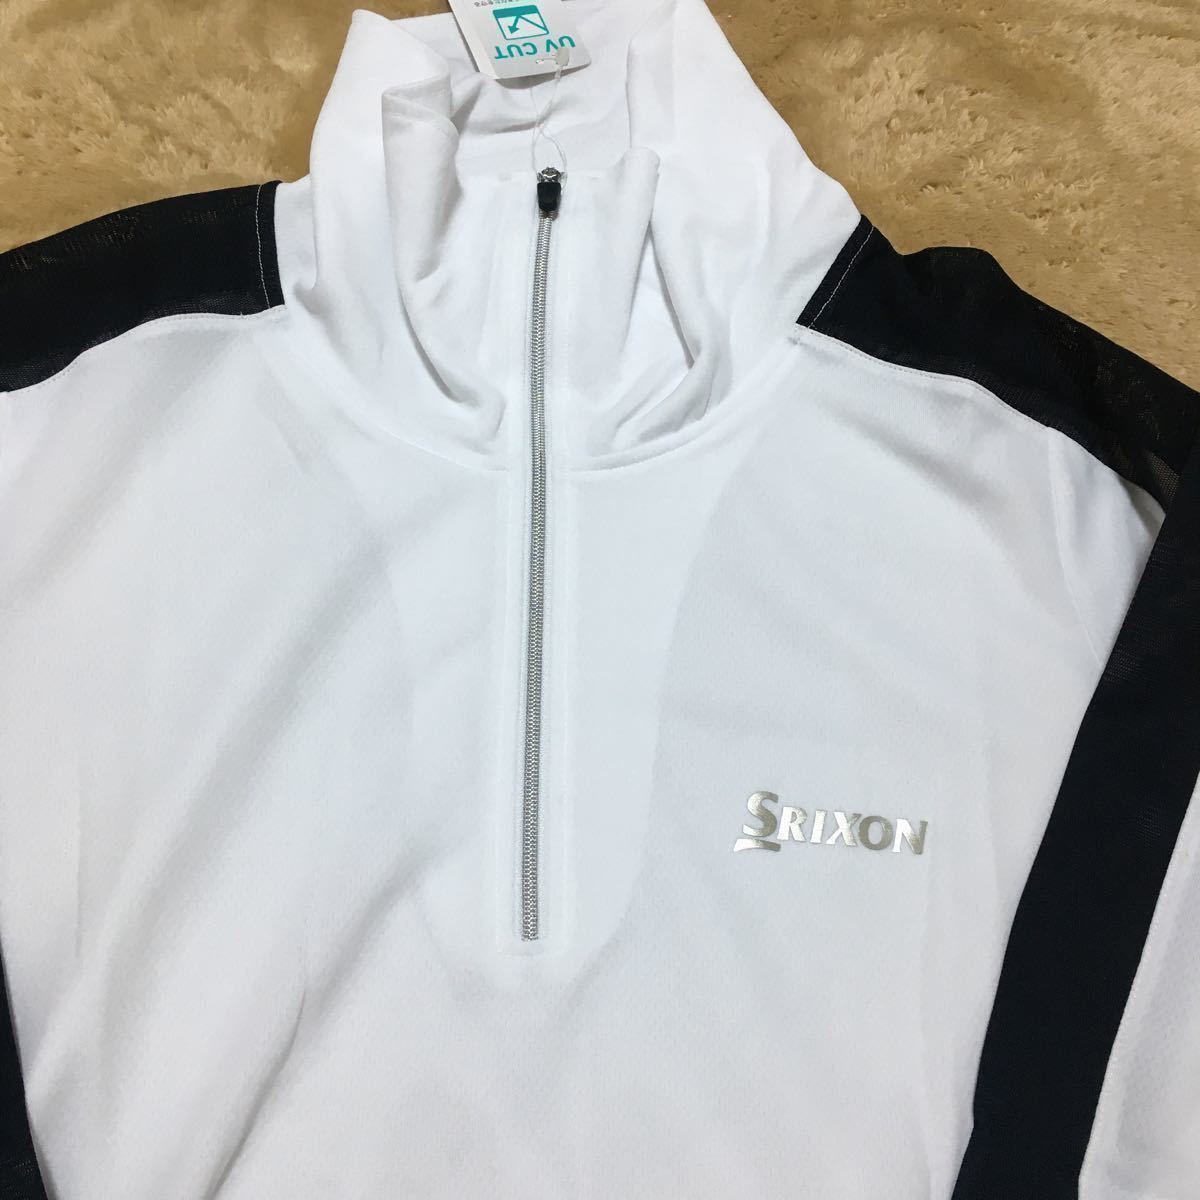 [ free shipping ] Srixon (SRIXON) long sleeve Zip Polo L size new goods SDP-1534W white 